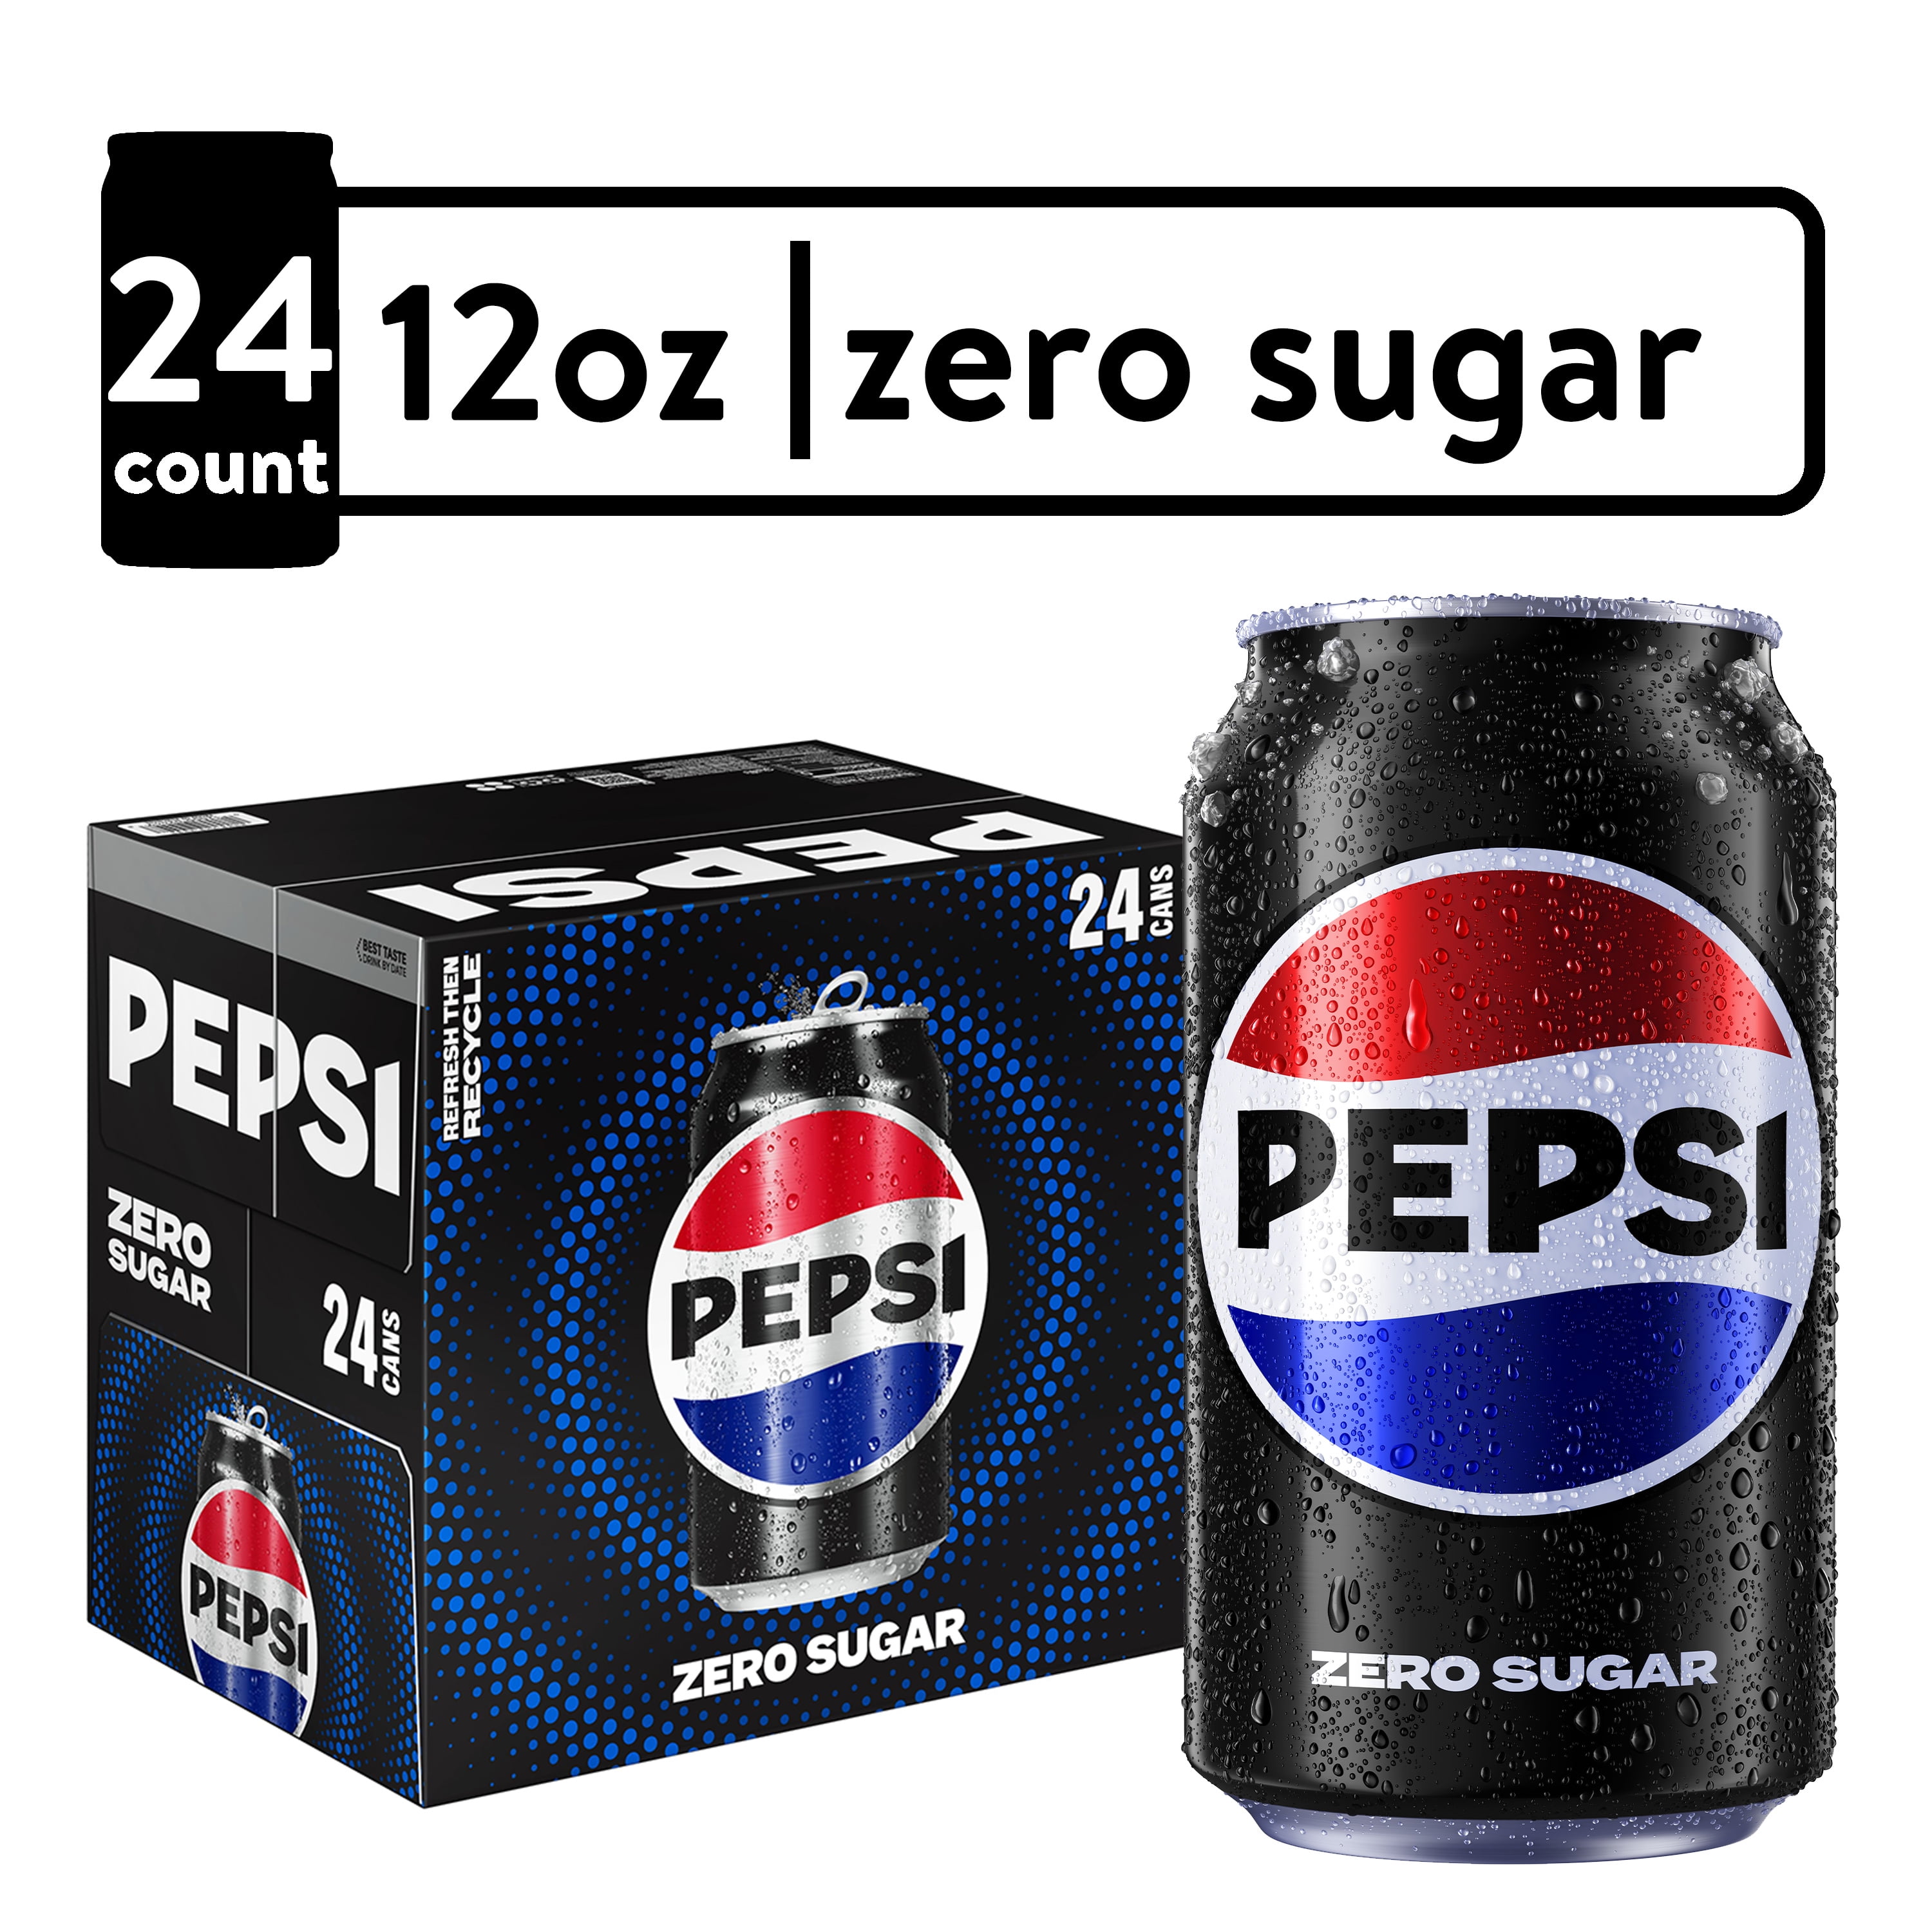 Pepsi - Zero Sugar